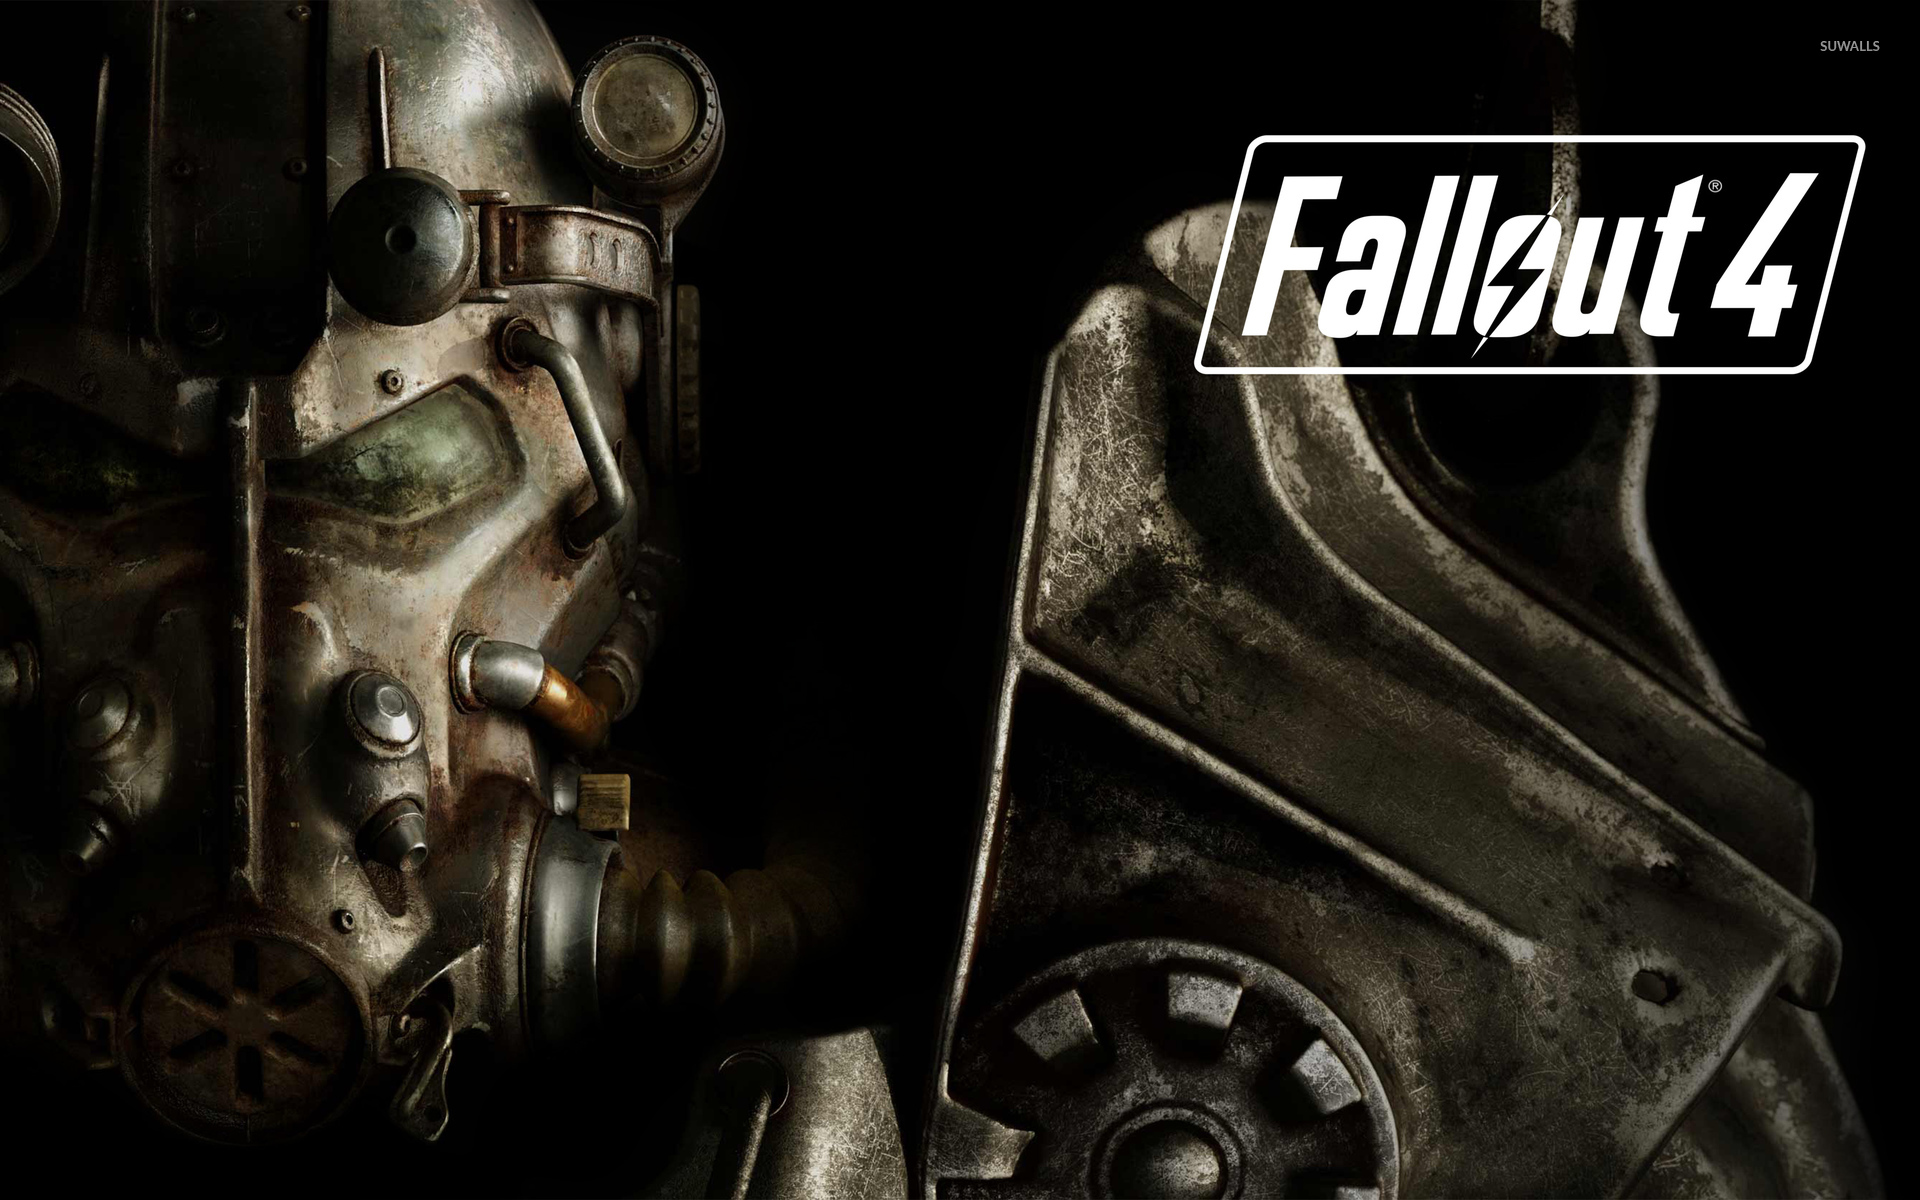 Fallout Armor Wallpaper Game